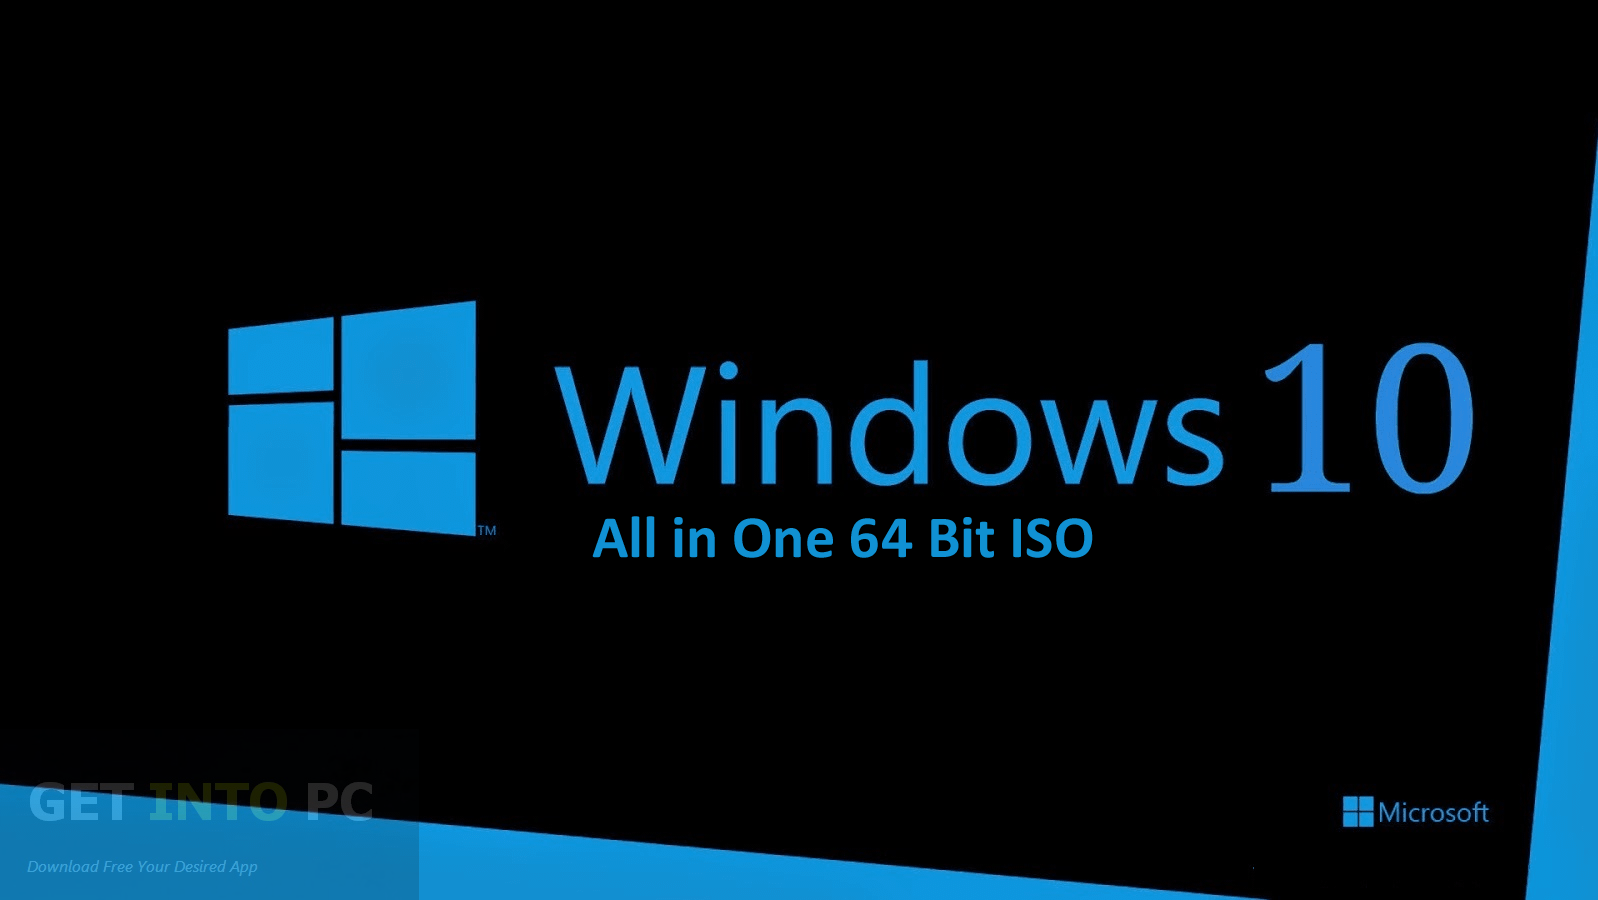 Backup windows 10 pro iso download 64 bit windows 10